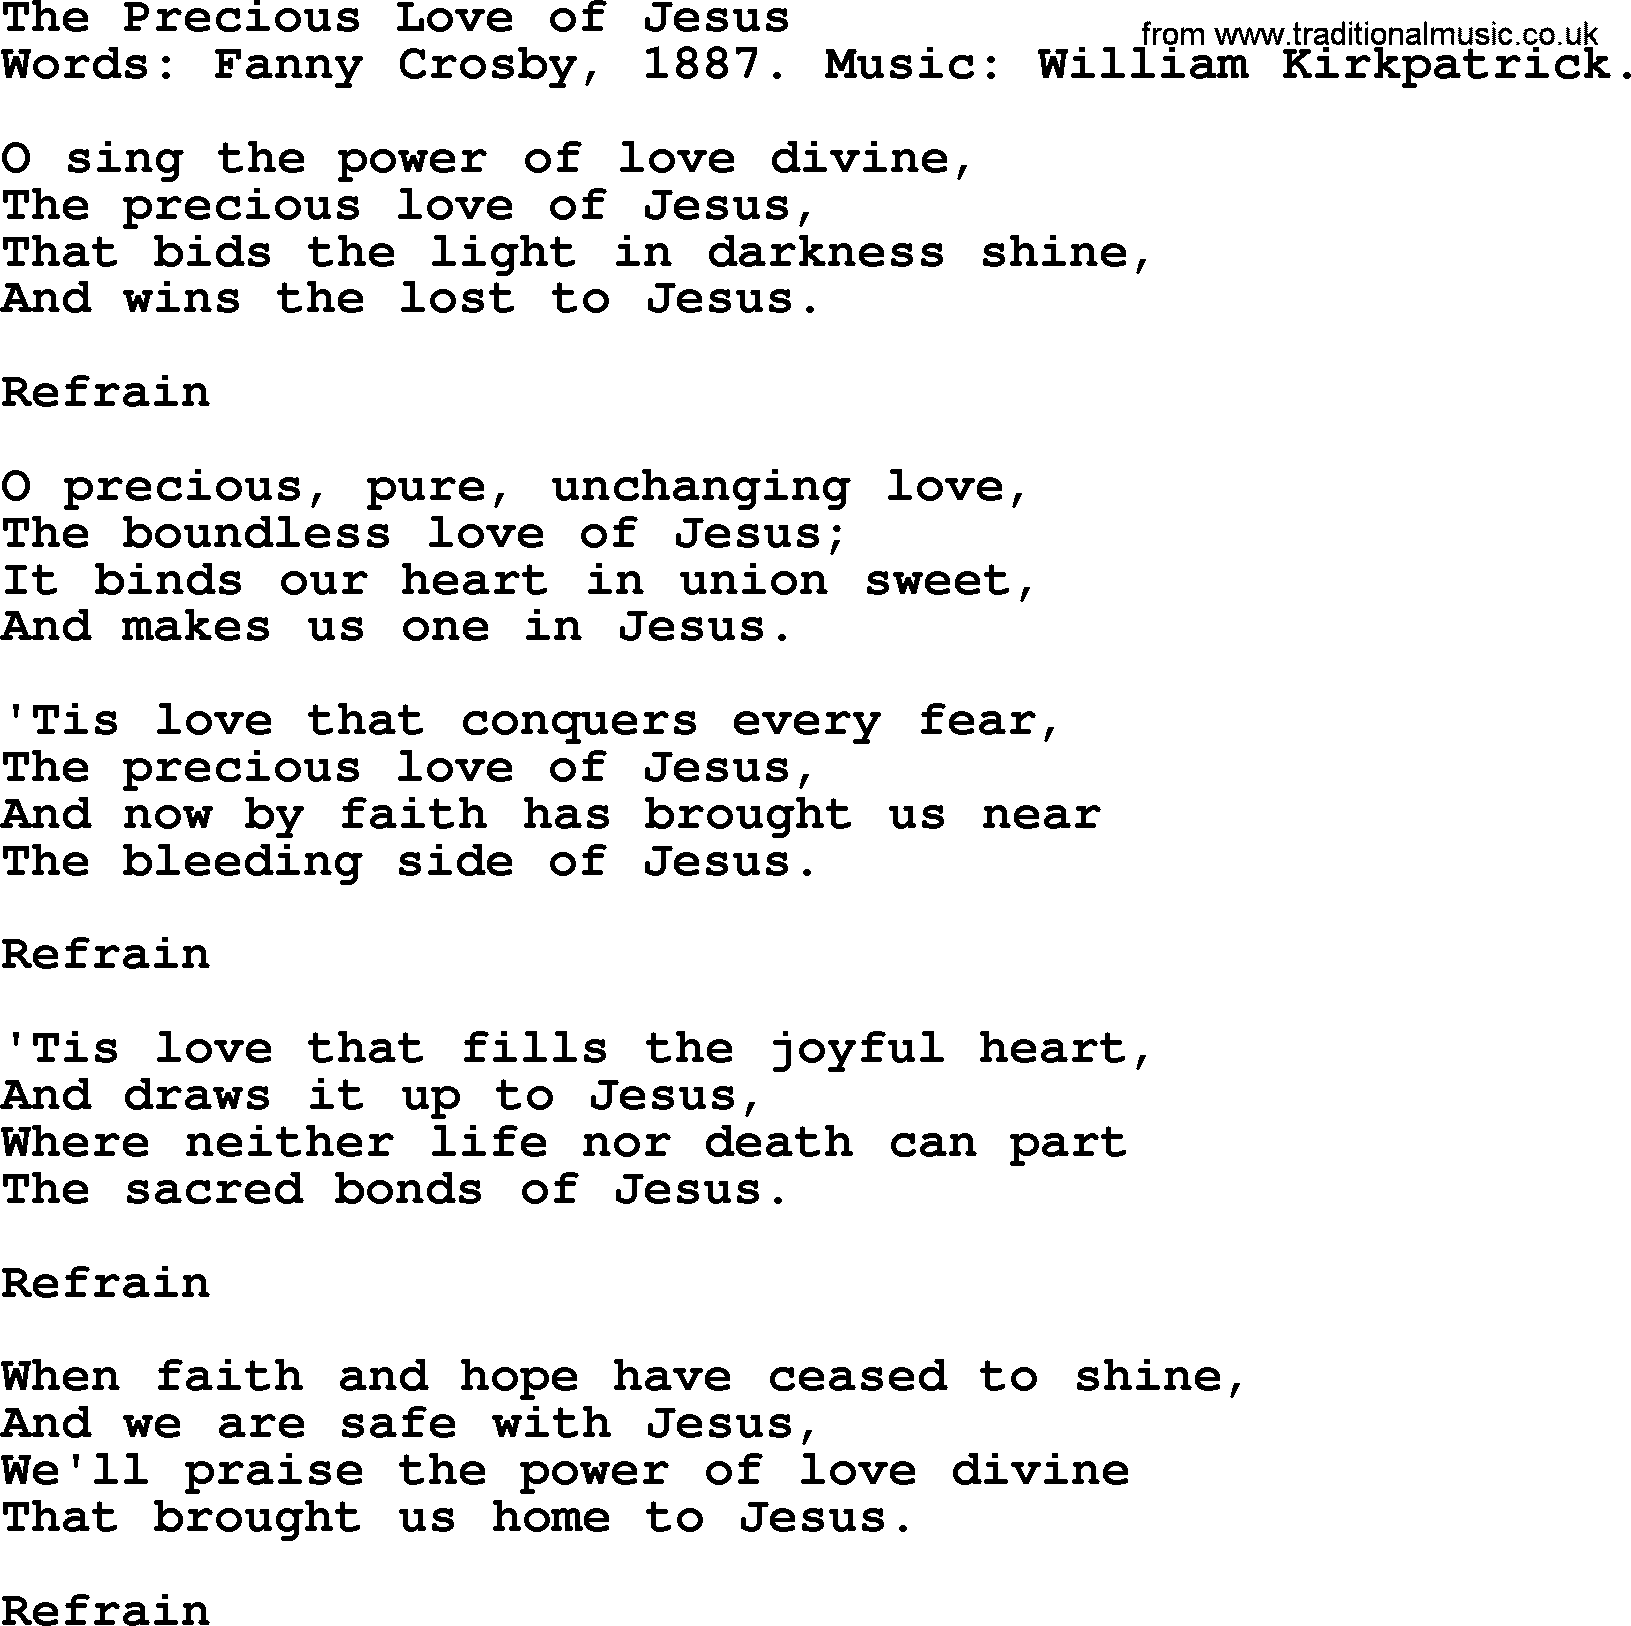 Fanny Crosby song: The Precious Love Of Jesus, lyrics